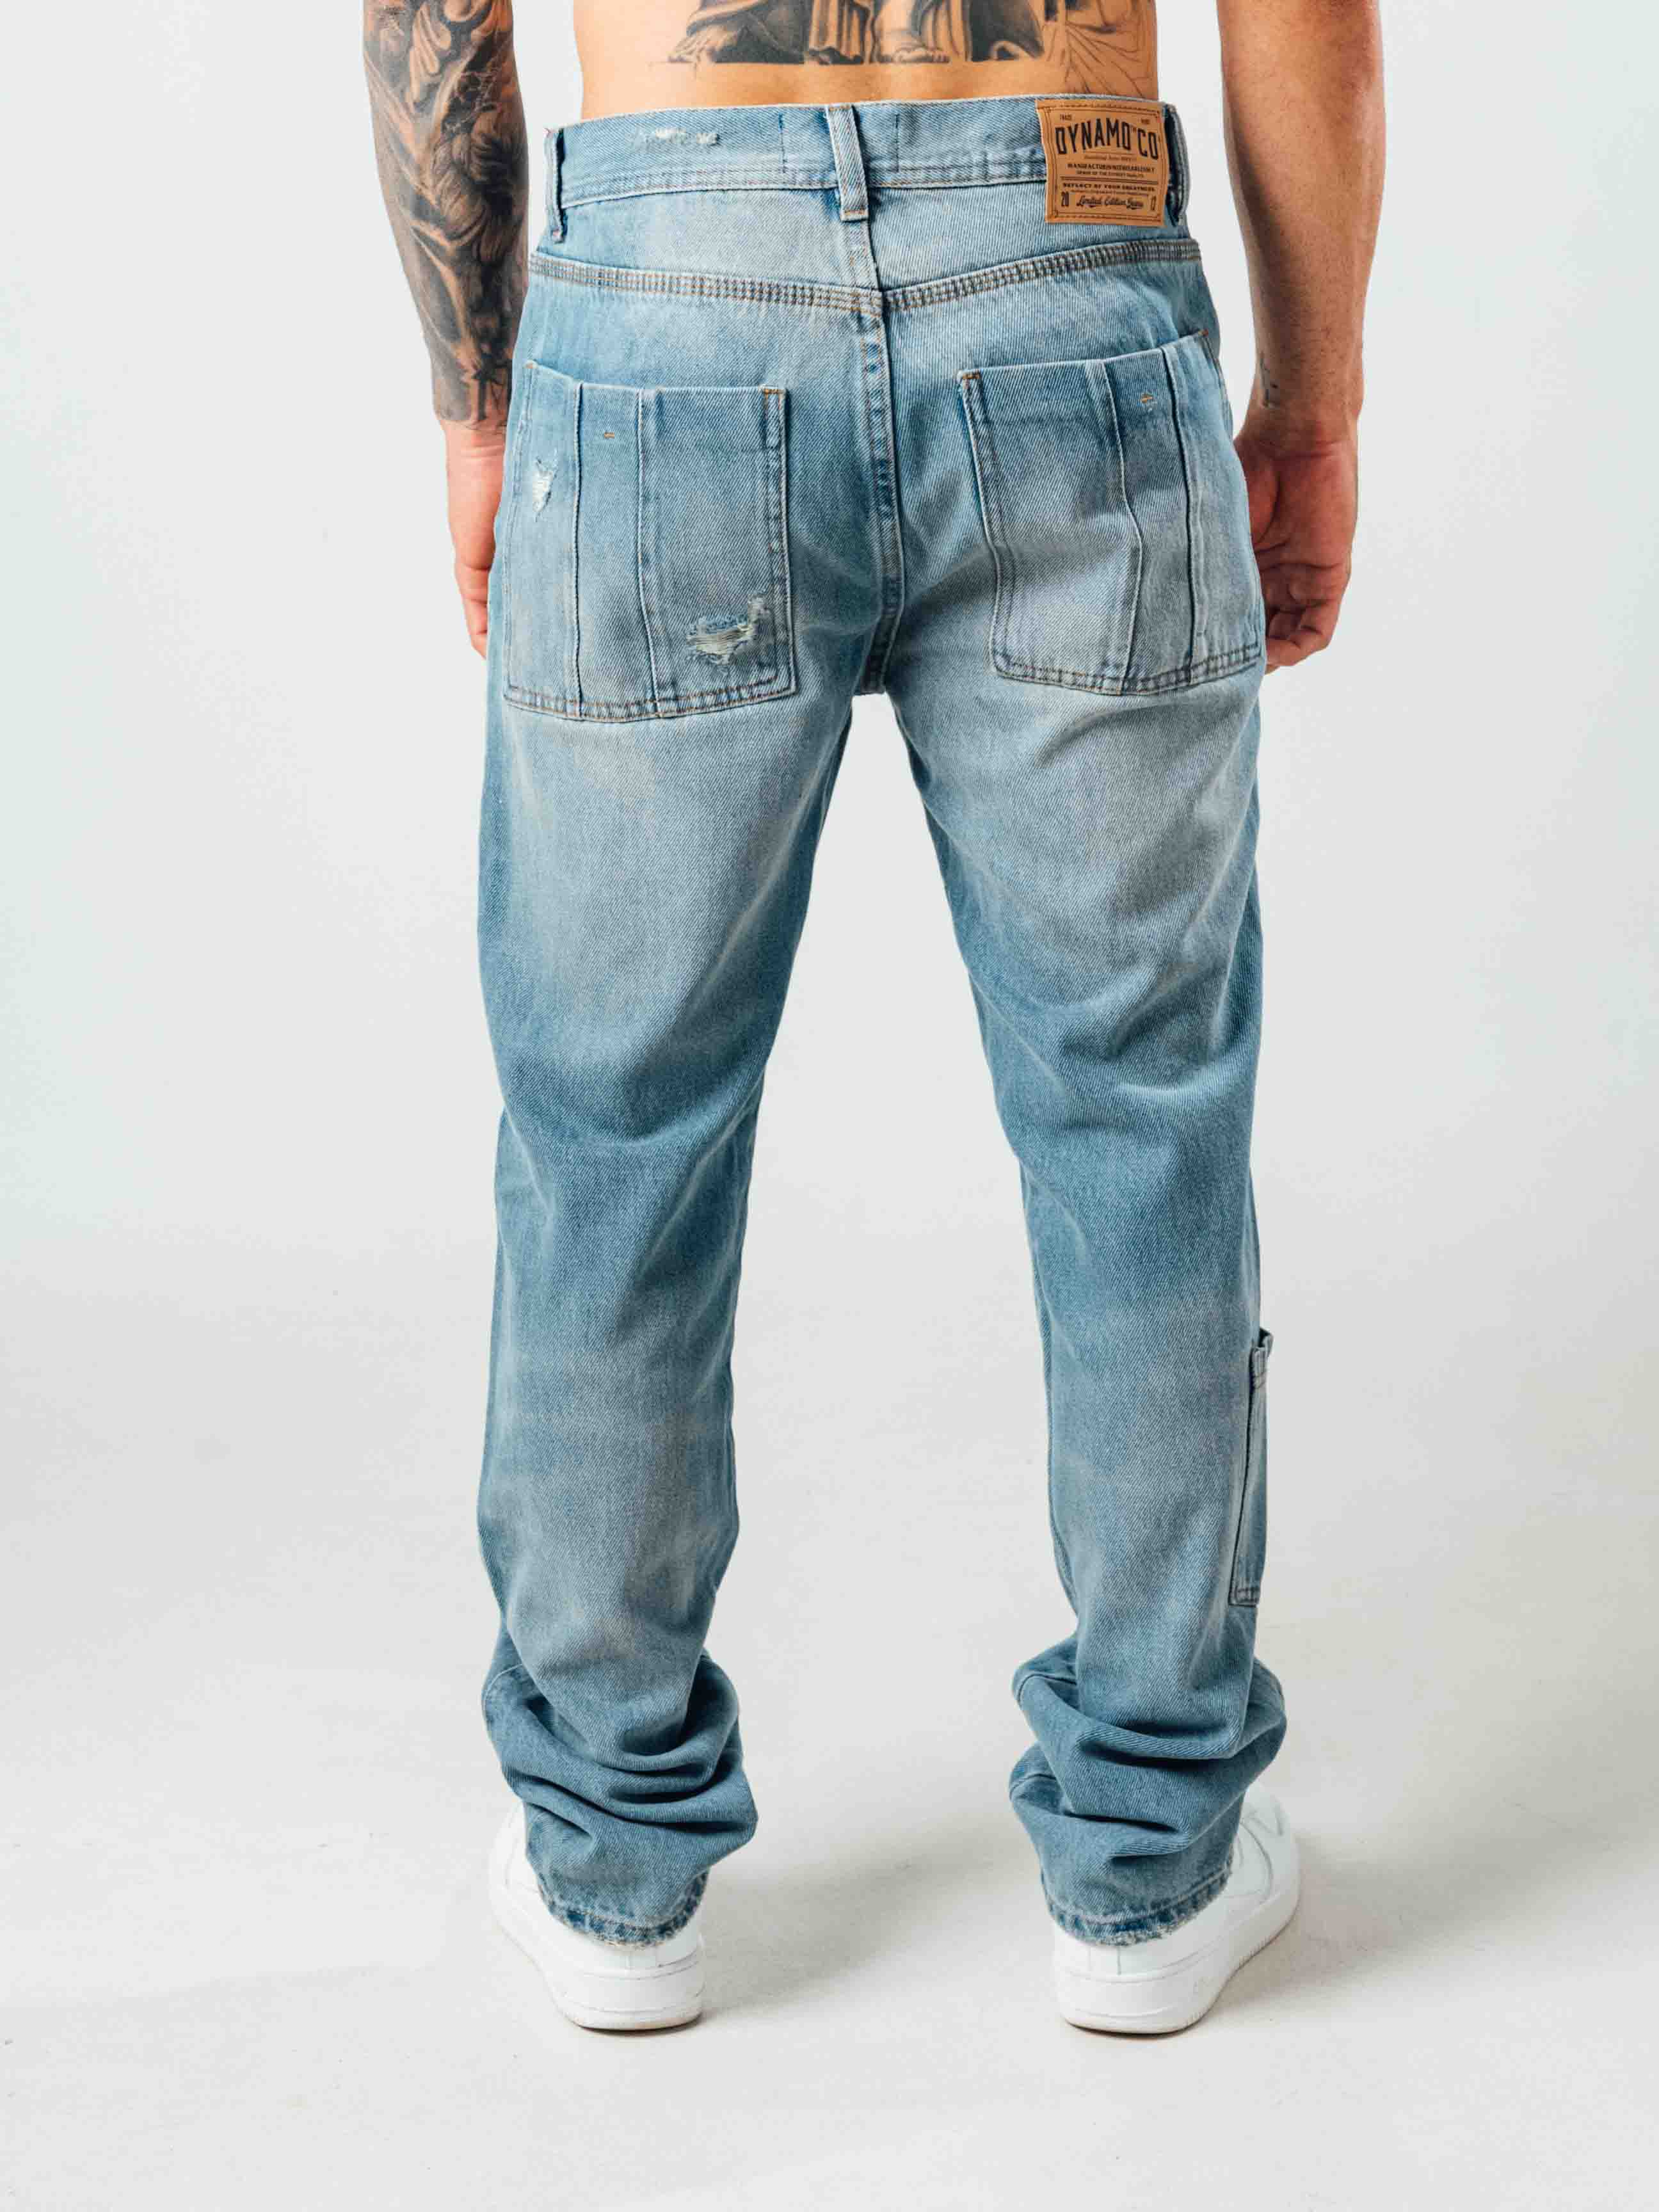 Jeans Regular Azul - Ref 399